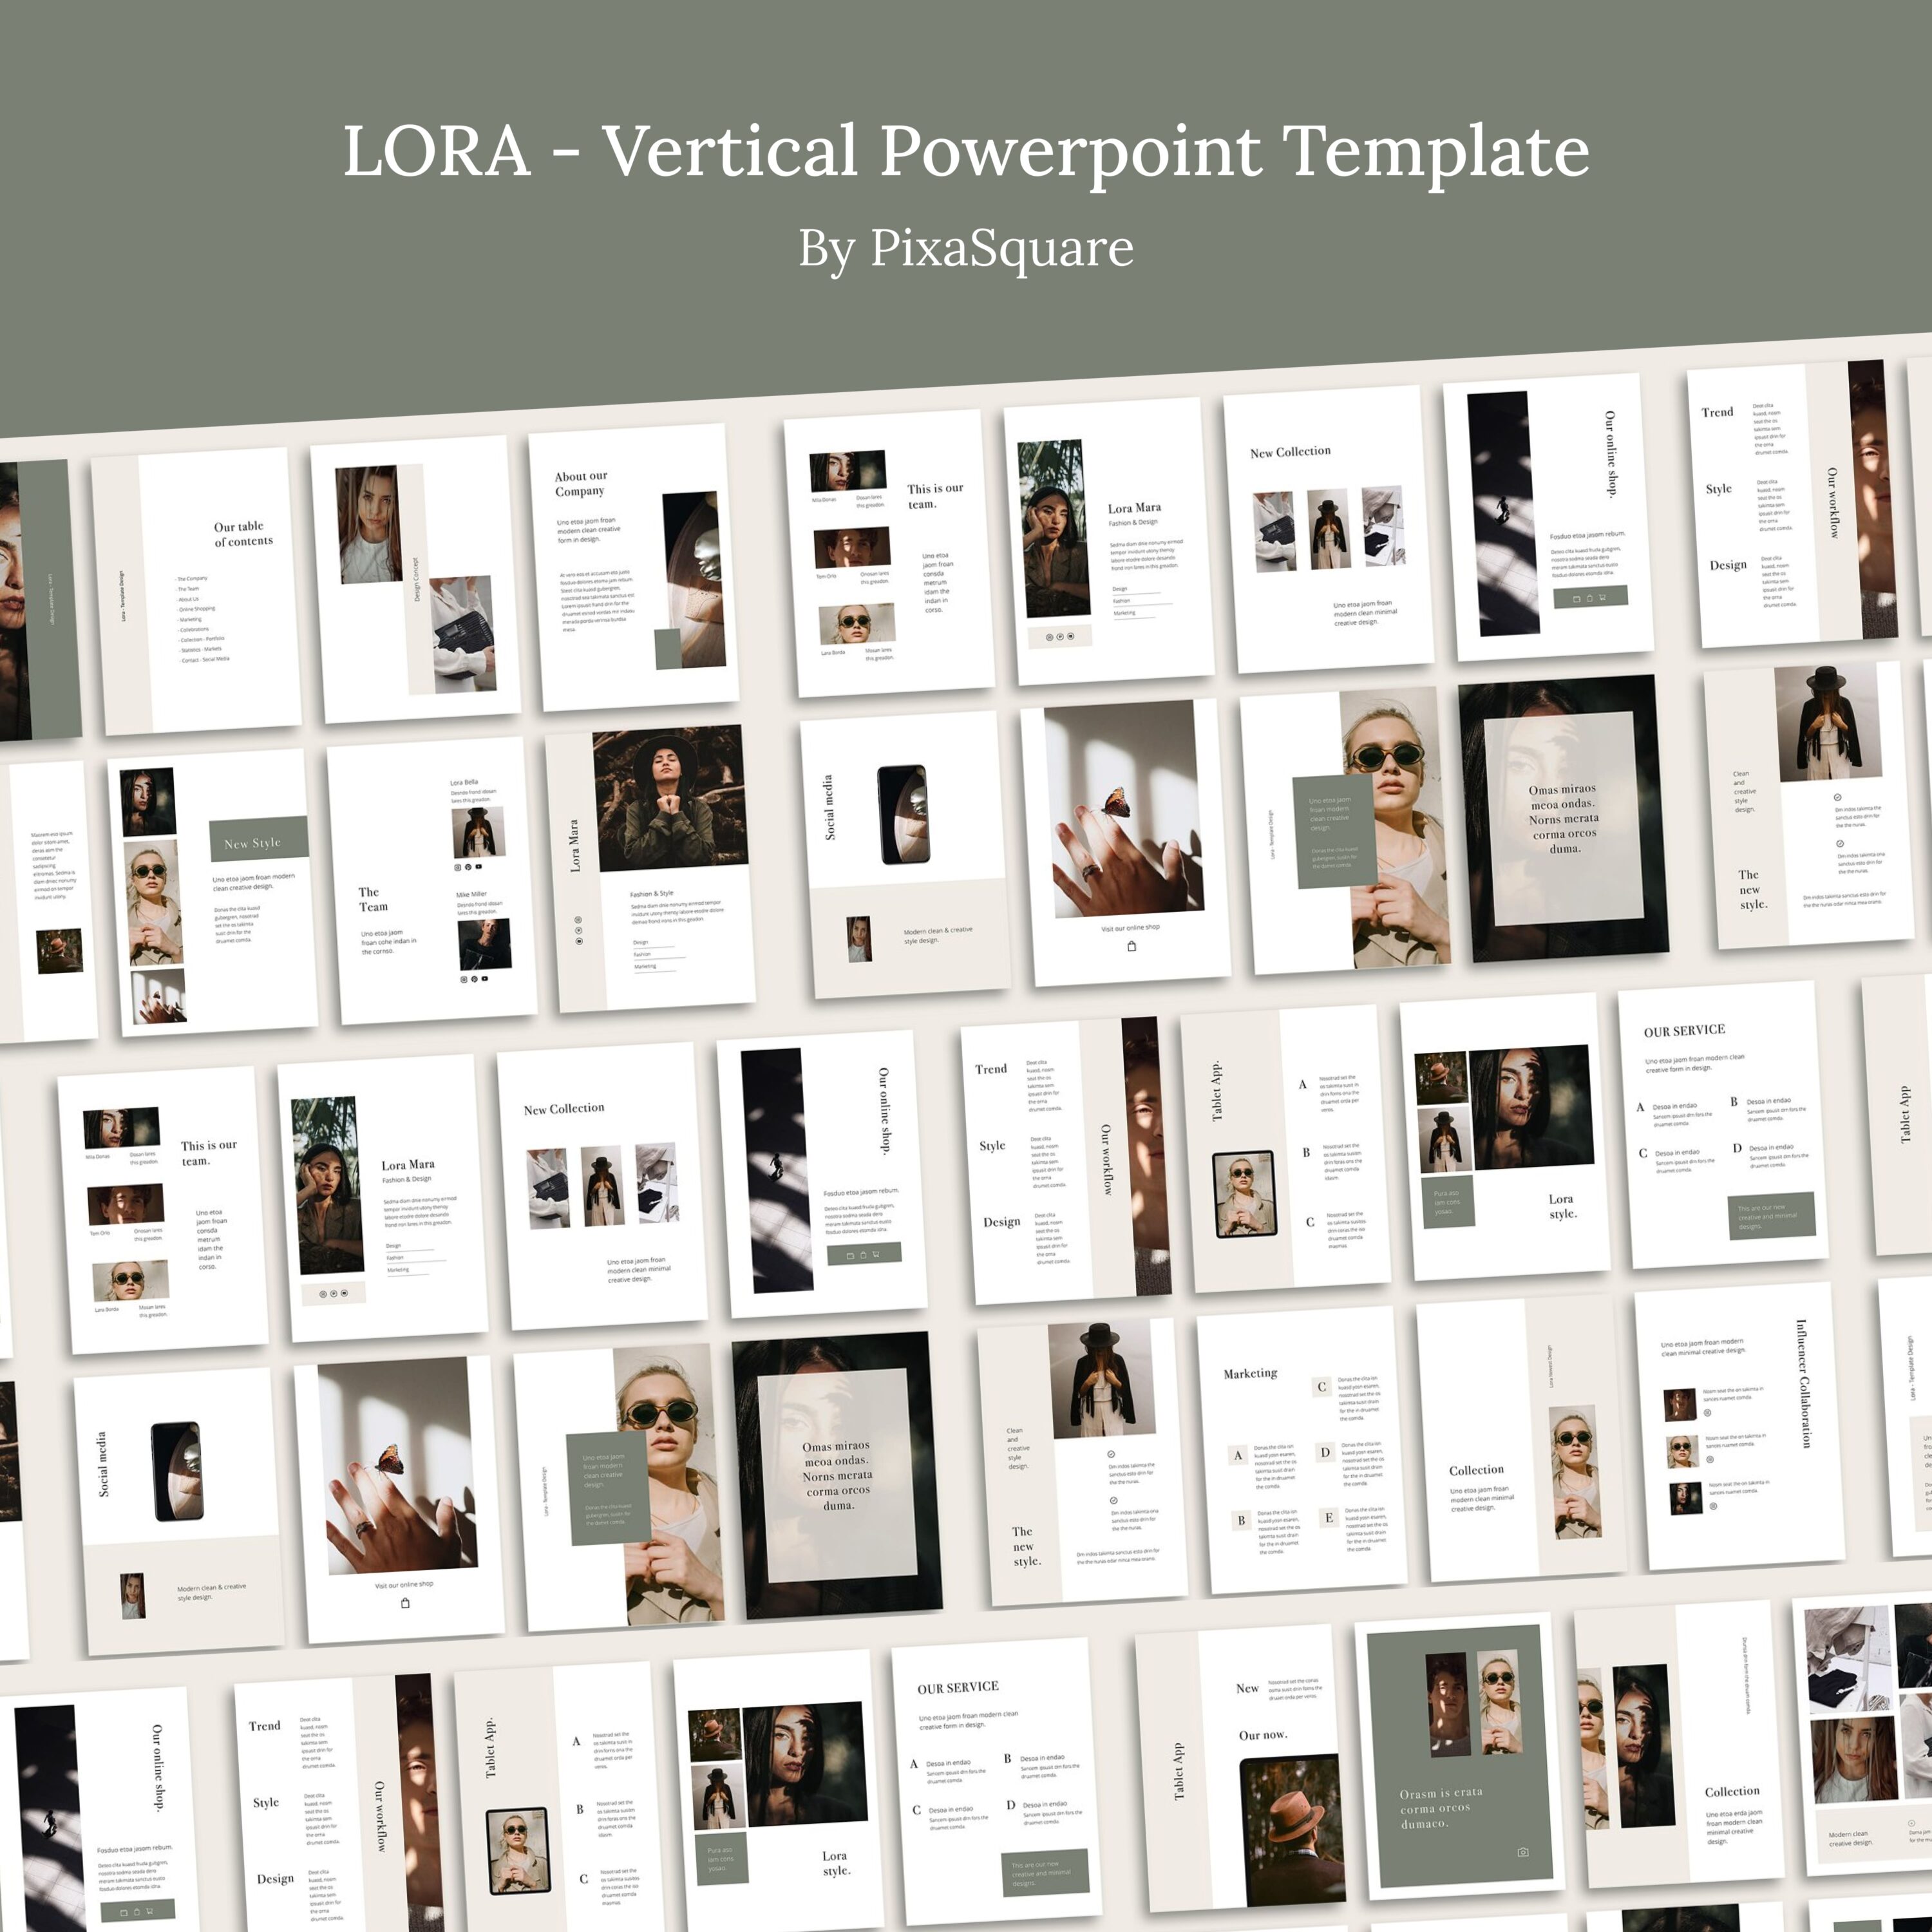 LORA - Vertical Powerpoint Template.